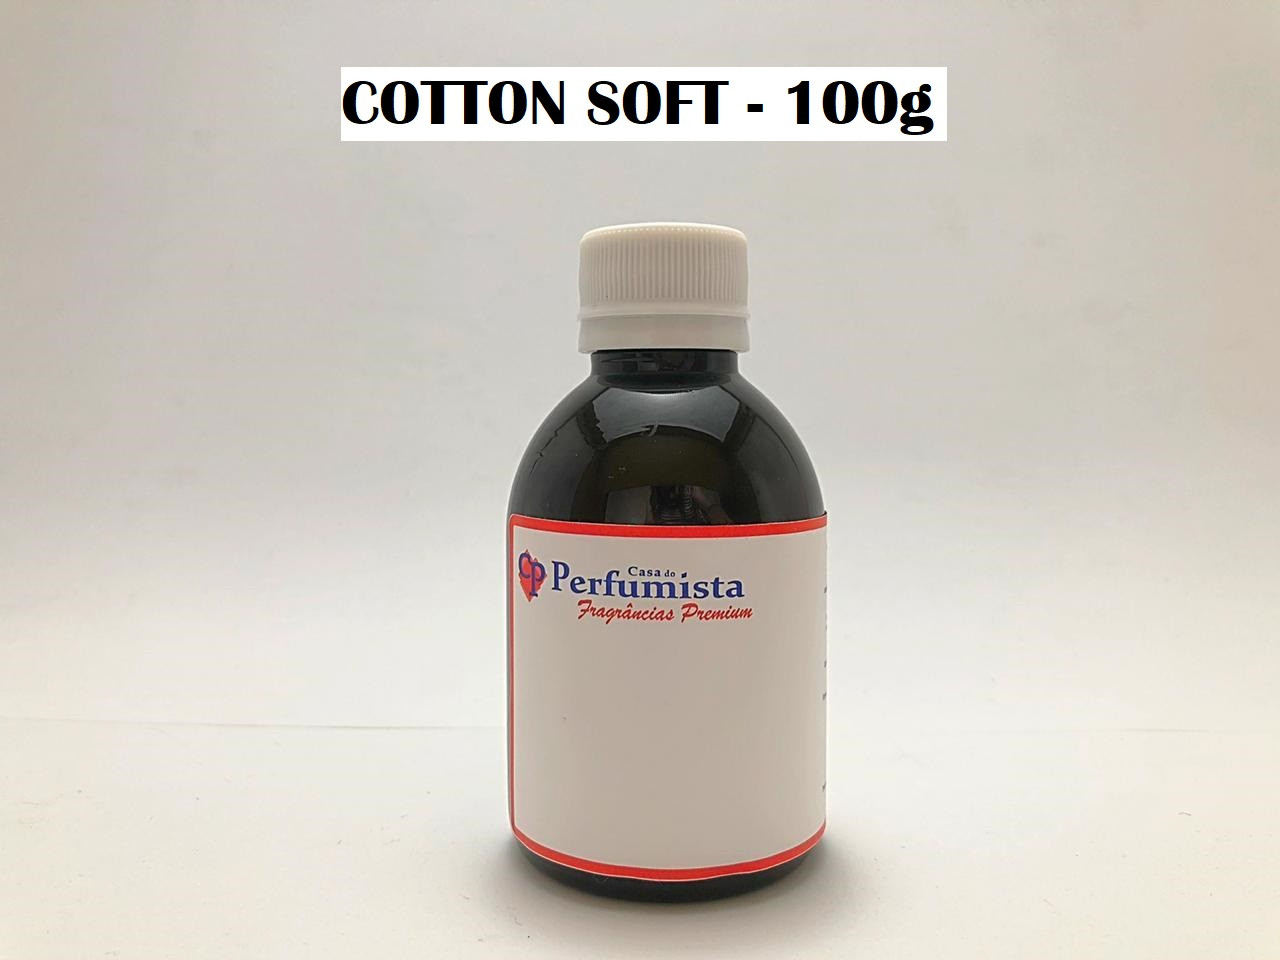 COTTON SOFT - 100g